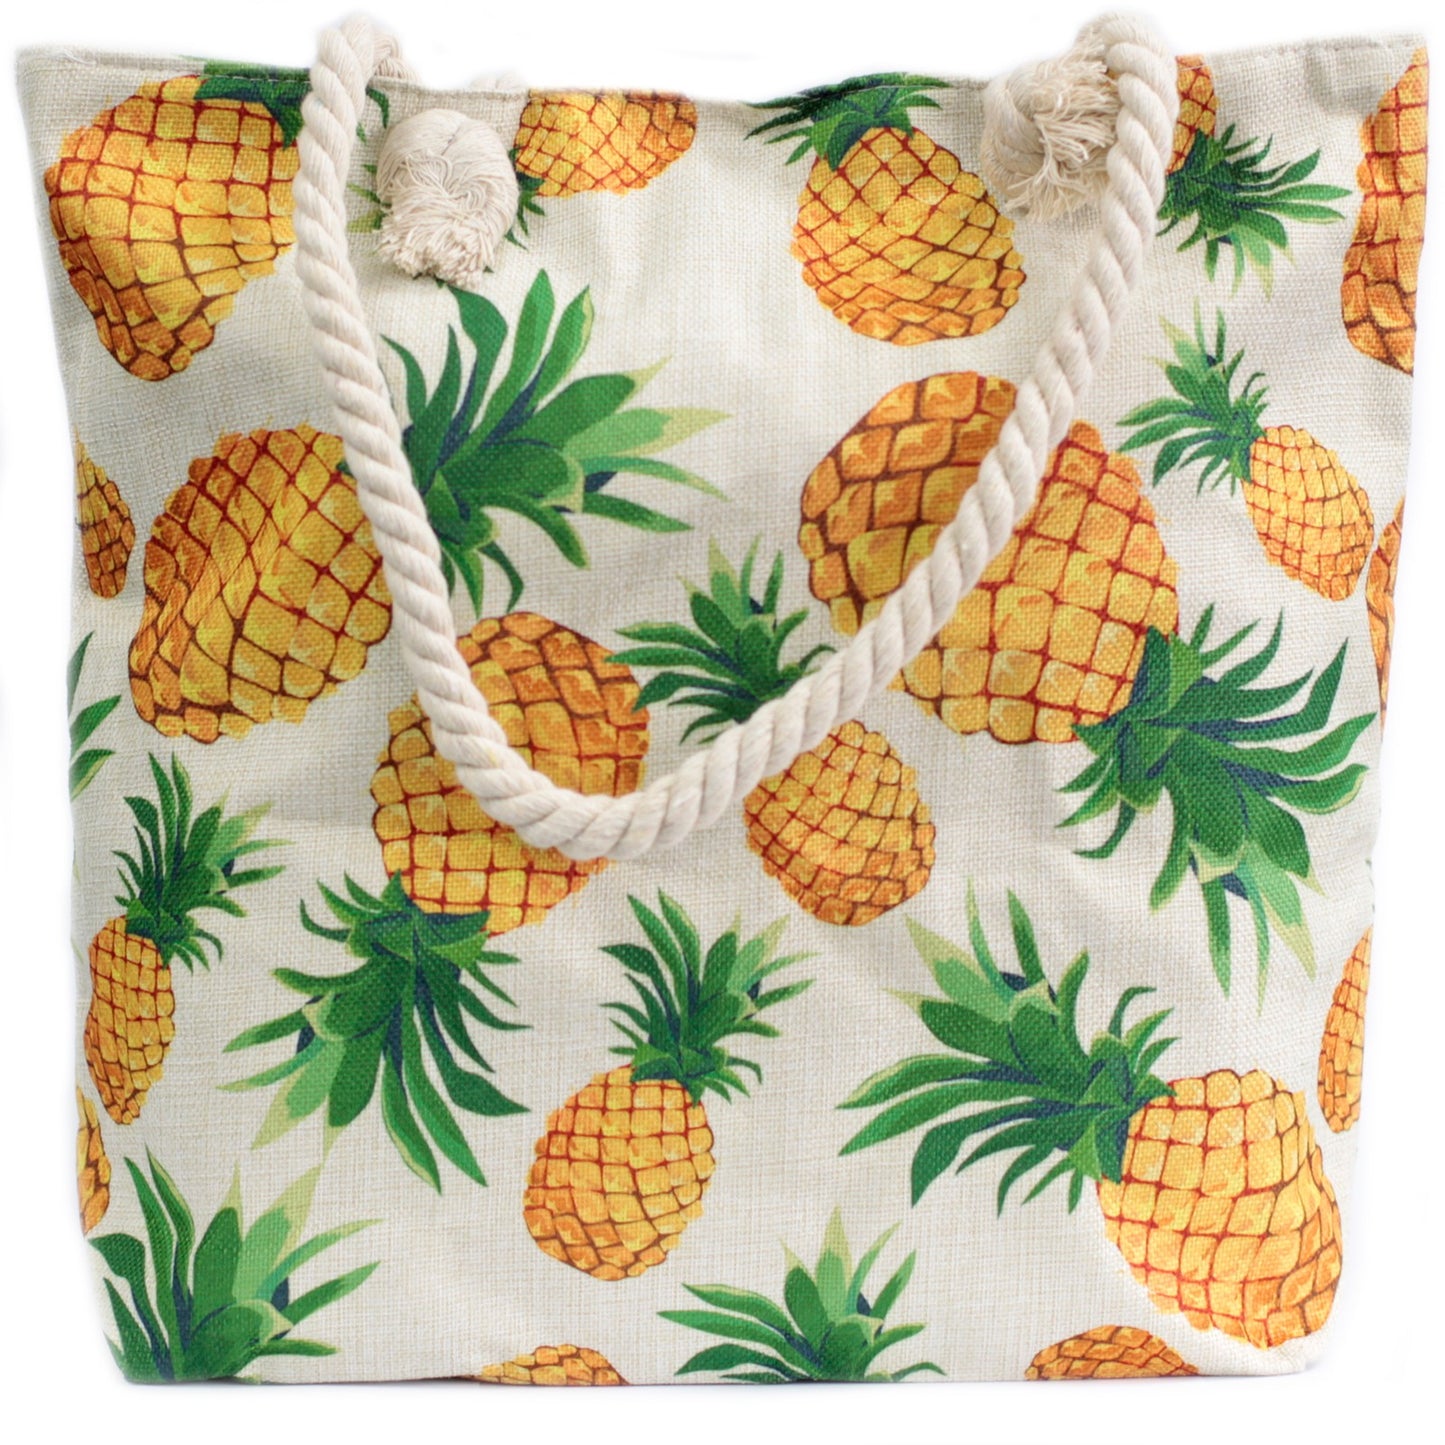 Pineapple Rope Tote Shopping Beach Bag